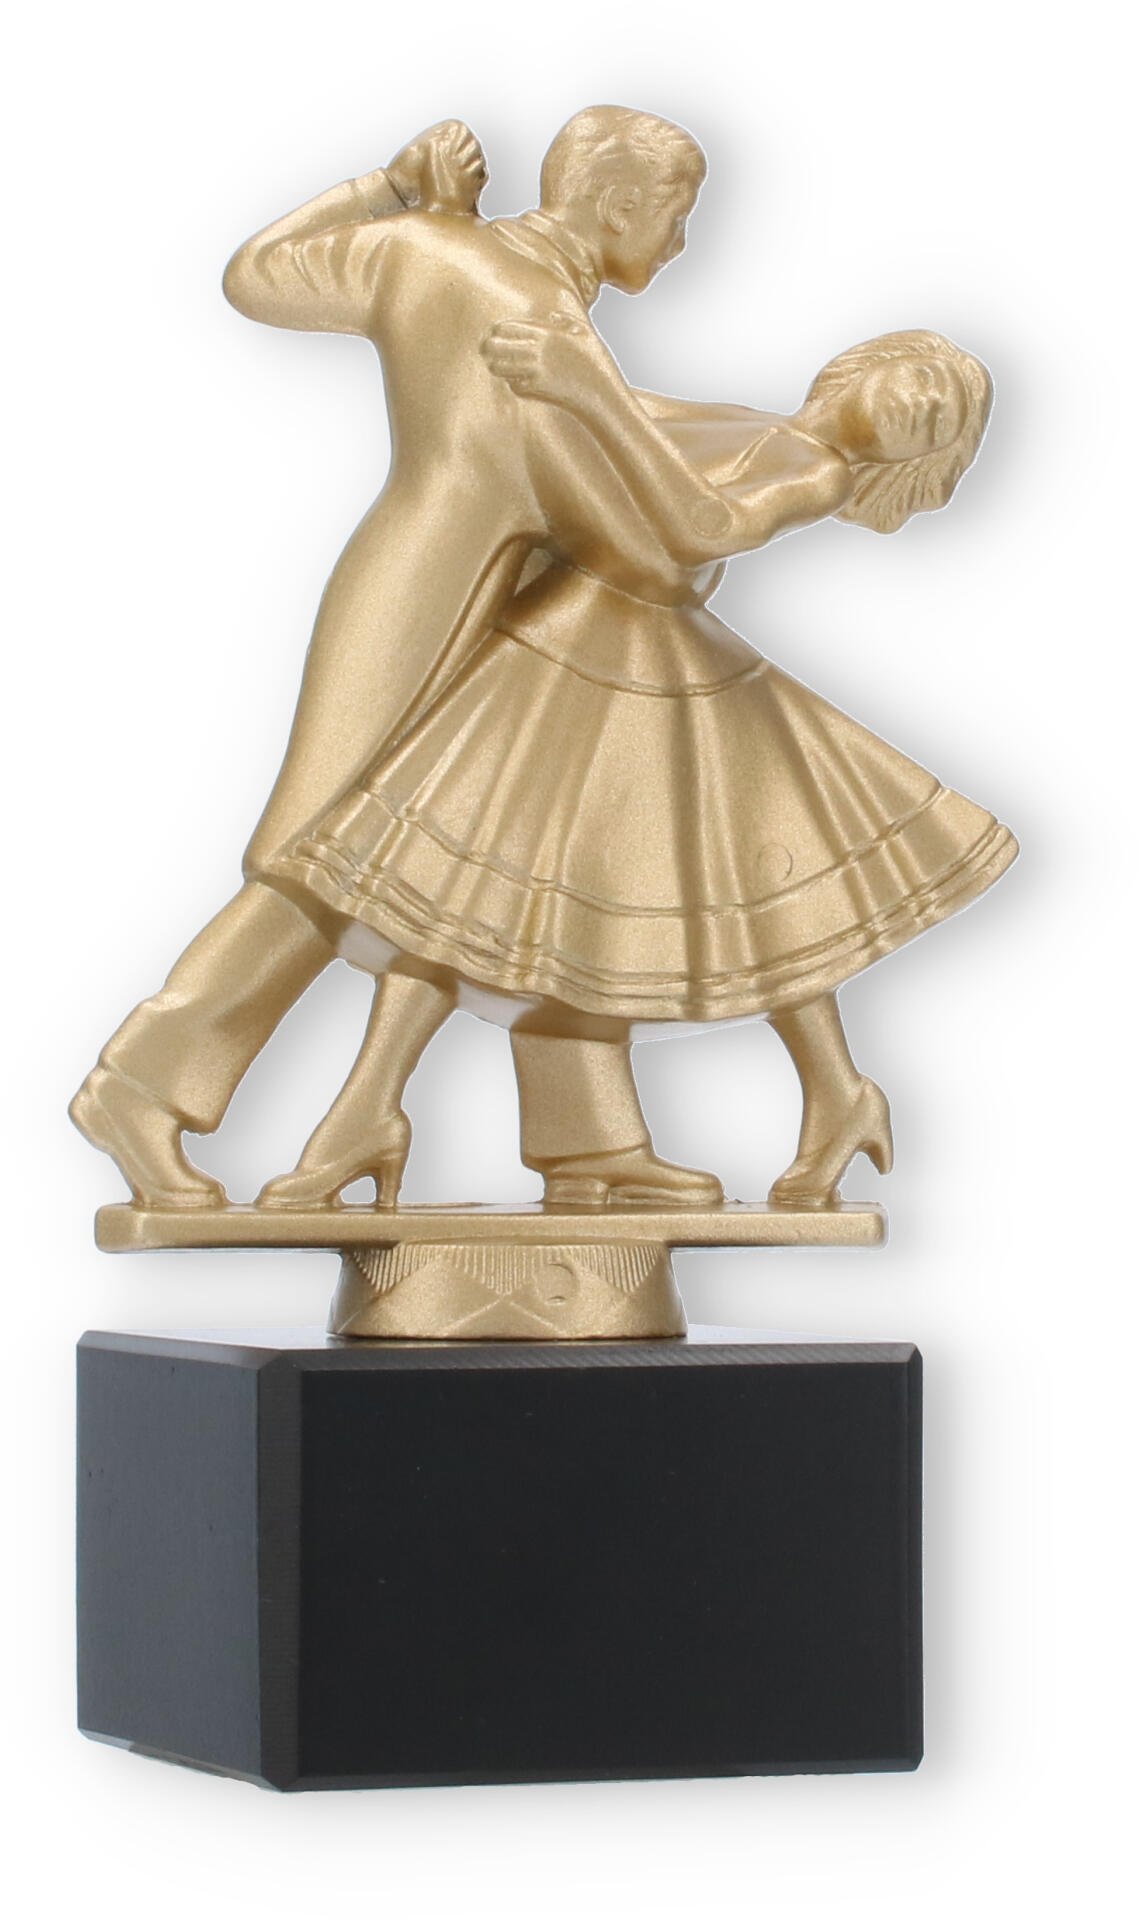 Pokal Metallfigur Tanzpaar goldmetallic auf schwarzem Marmorsockel 16,0cm